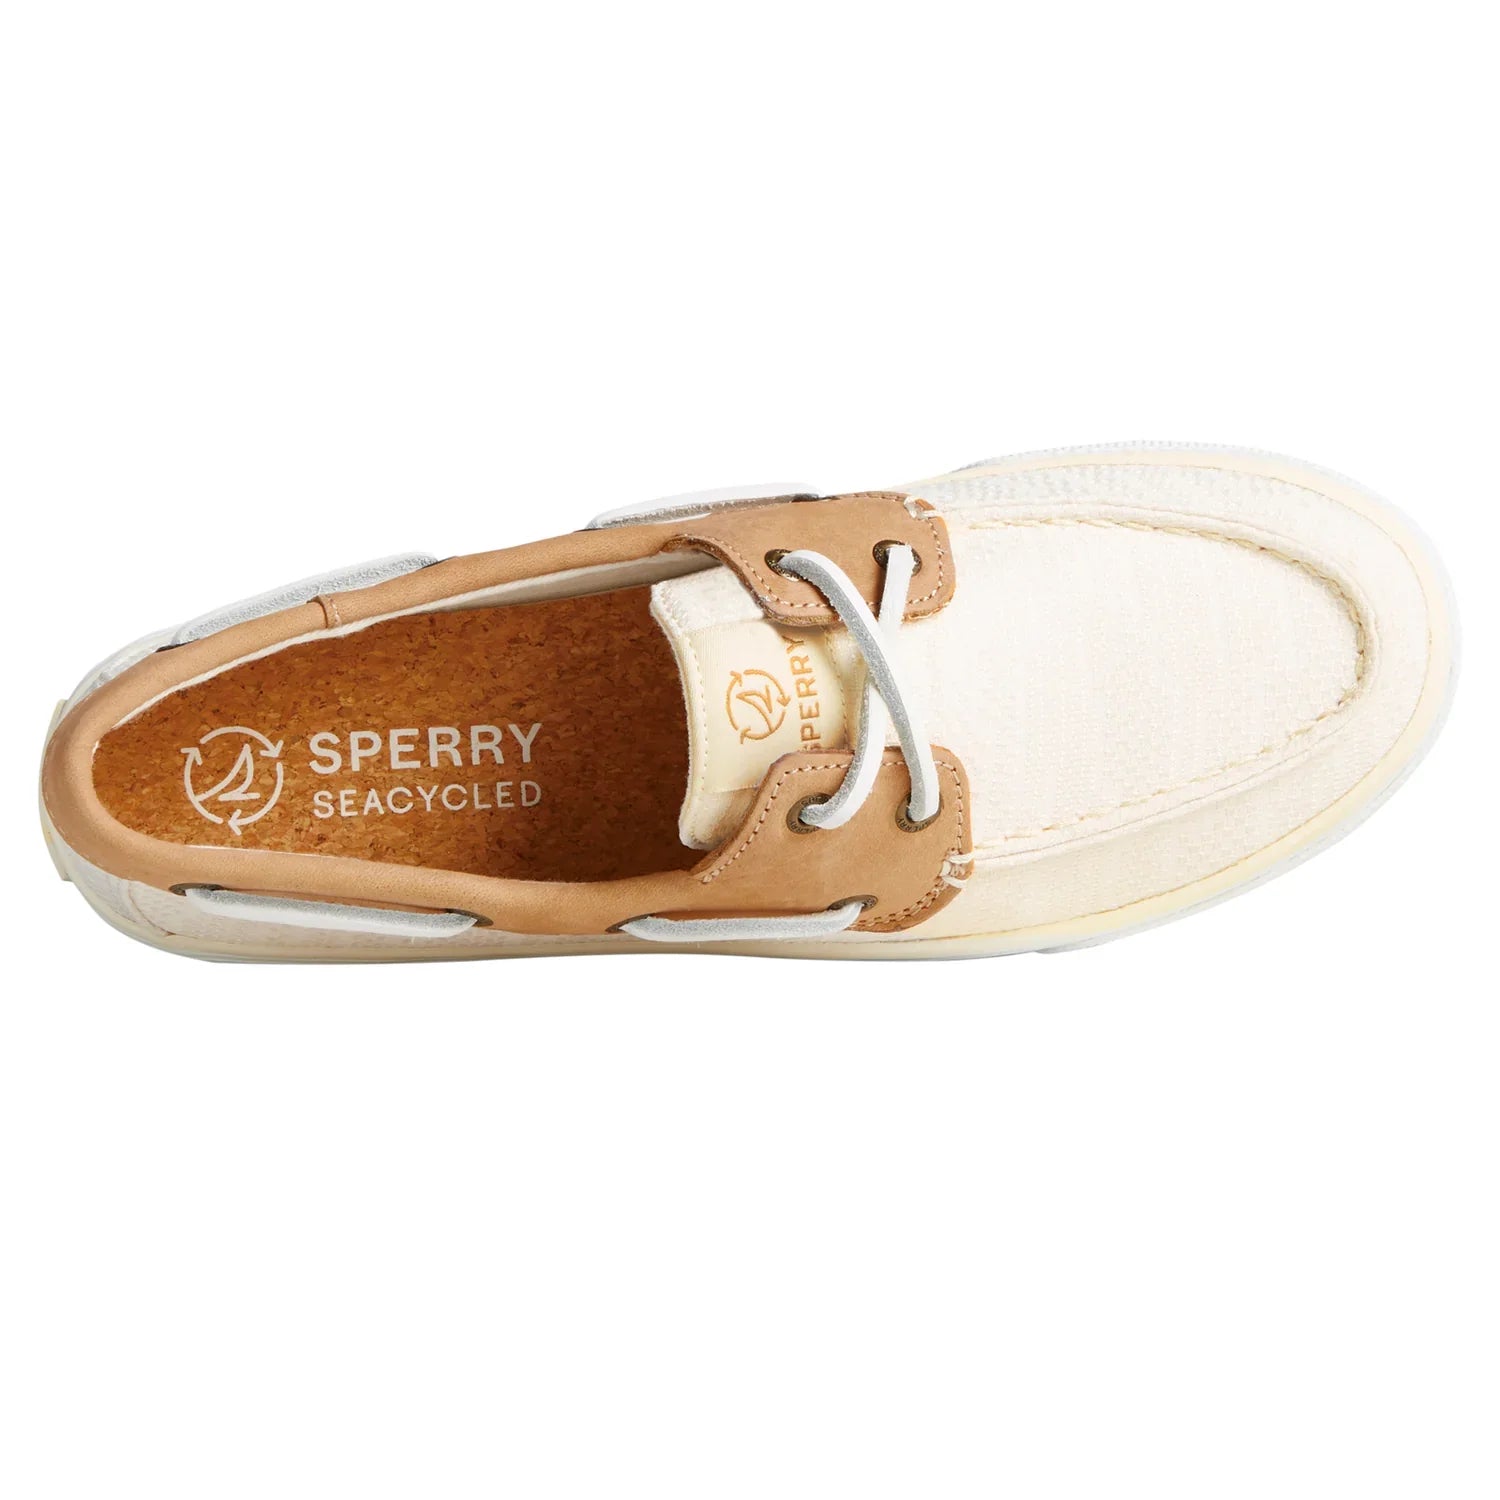 Zapato Sperry Mujer Sts89015 Calzado